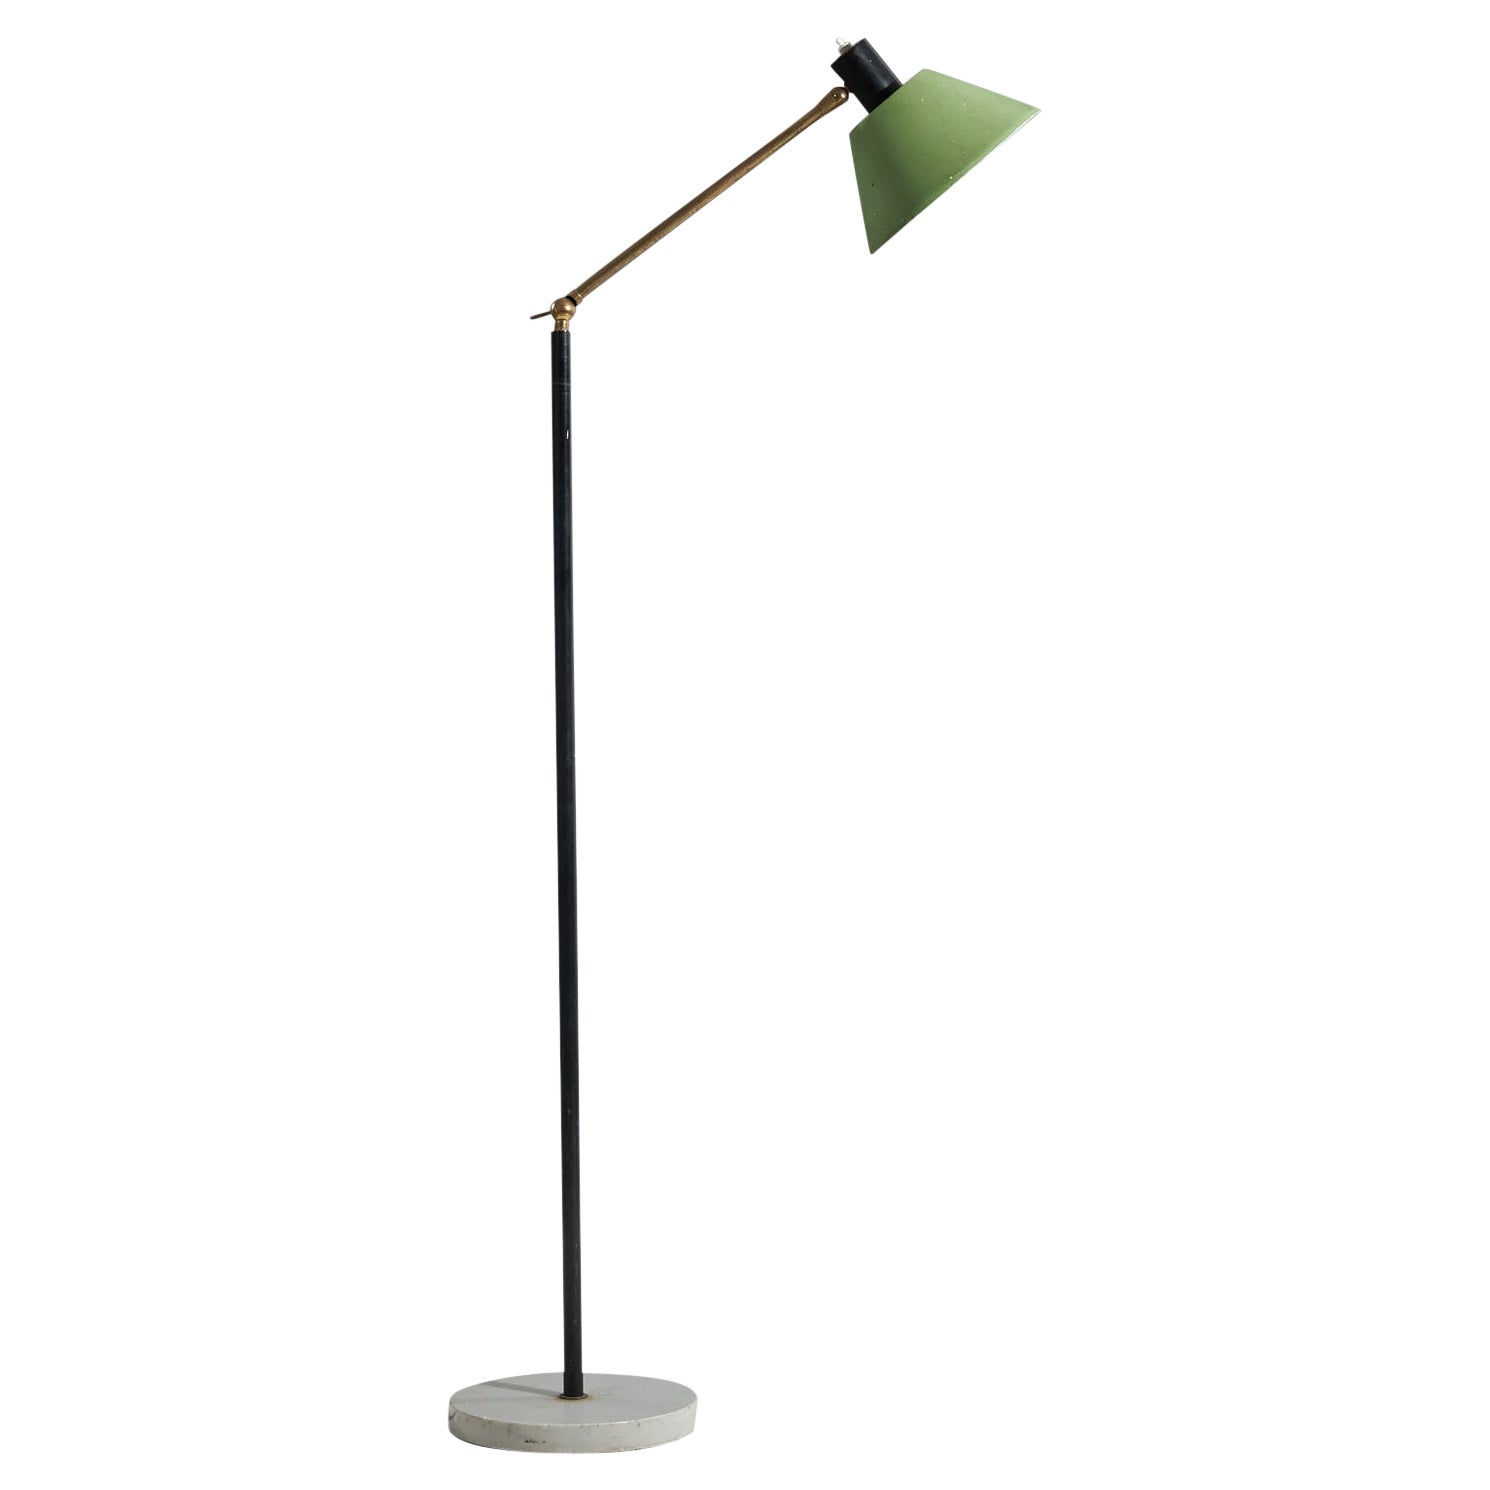 Stilux Milano, Green Floor Lamp, Brass, Metal, Marble, Italy, 1950s